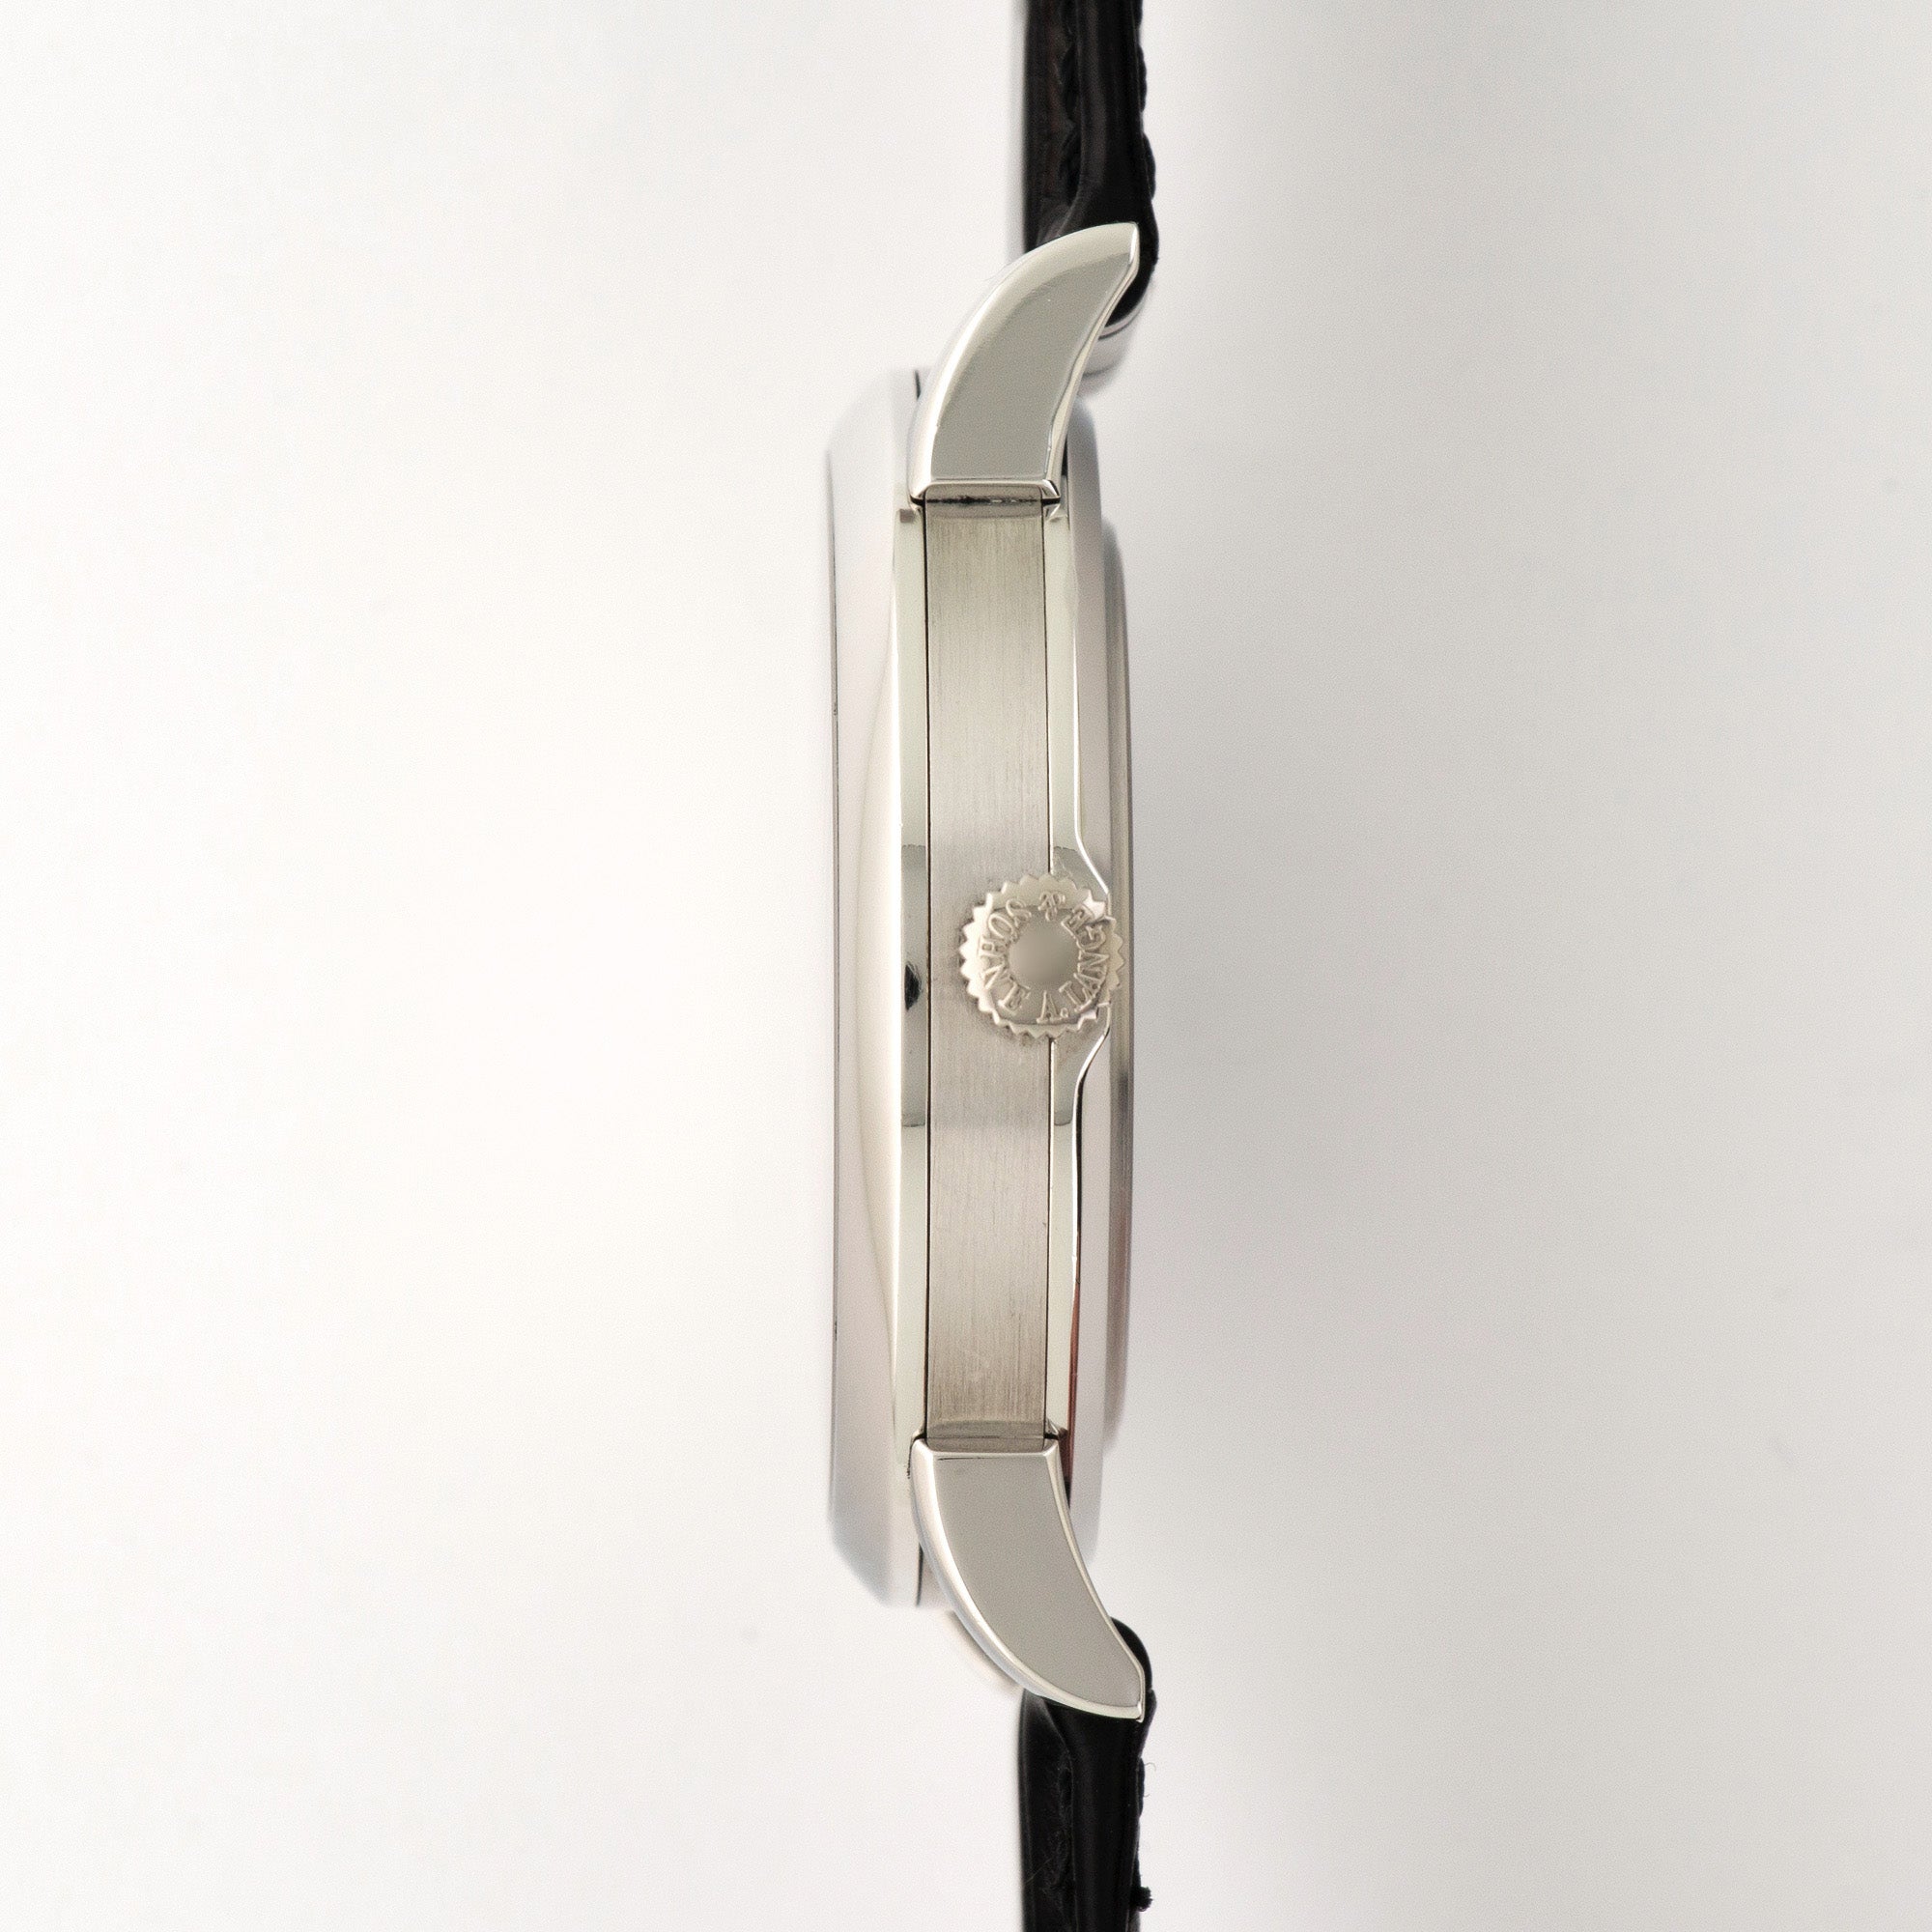 A. Lange &amp; Sohne - A. Lange &amp; Sohne Platinum Grand Lange 1 Watch Ref. 117.025 - The Keystone Watches